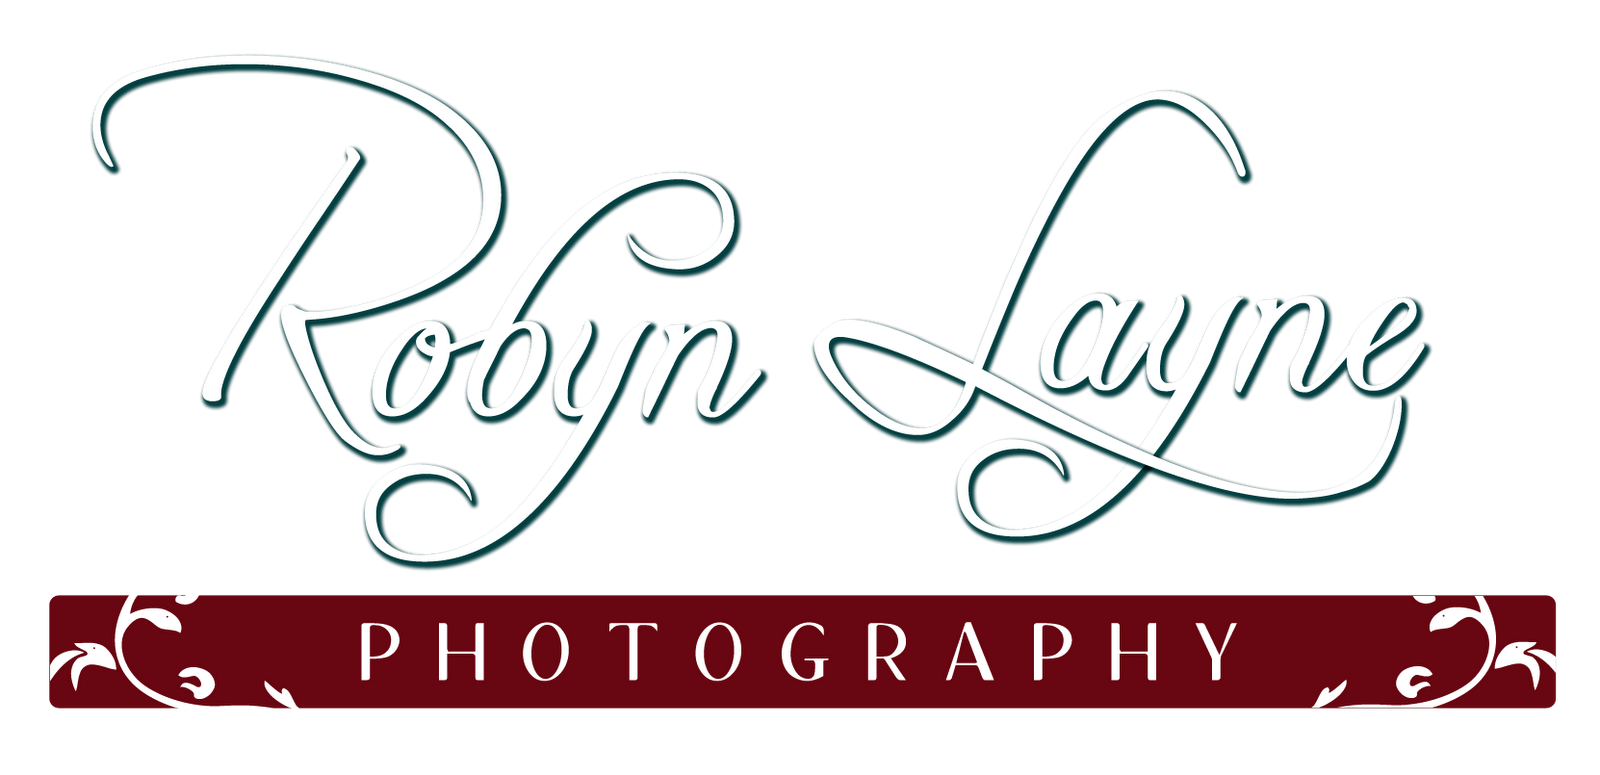 Robyn Layne Photography